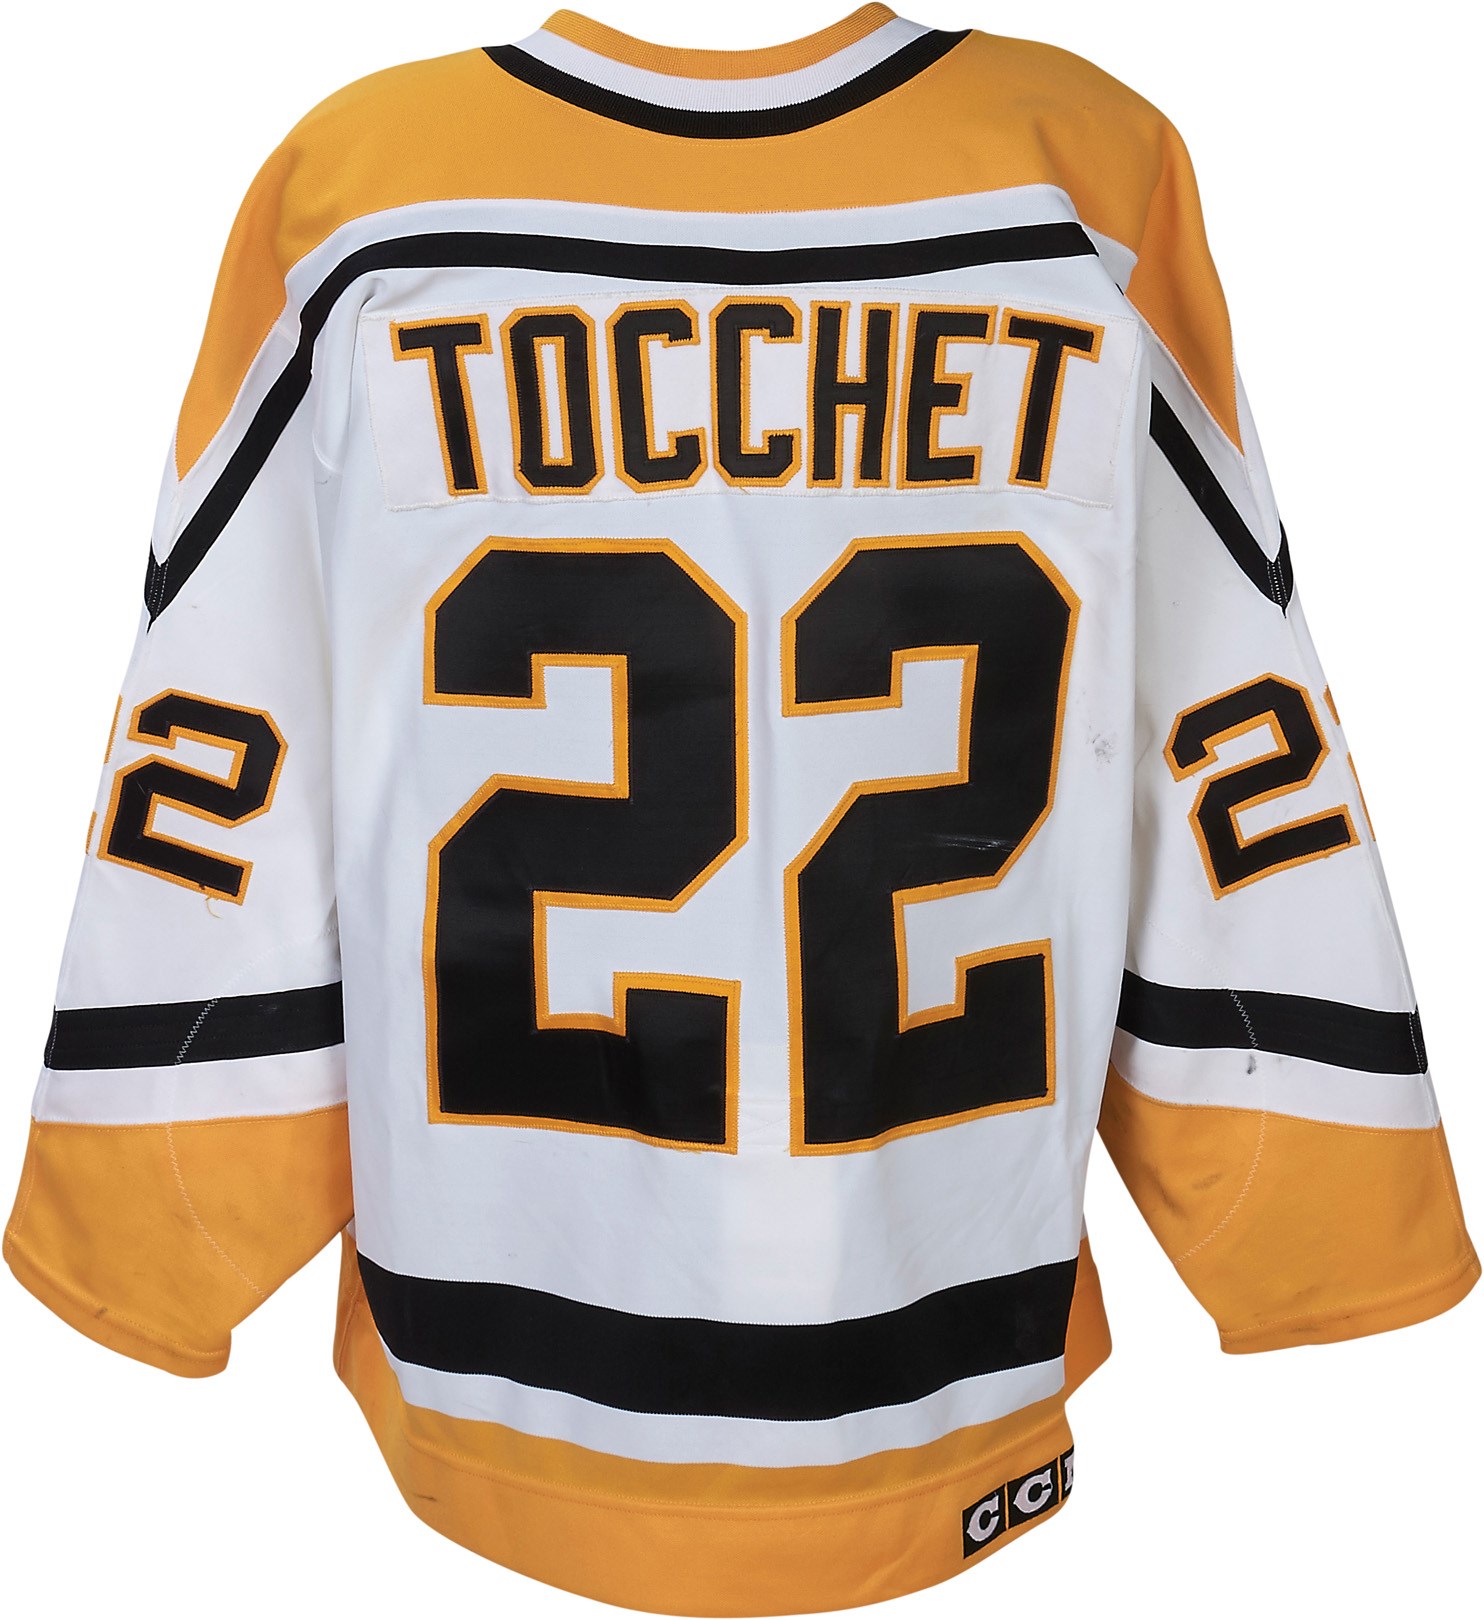 Hockey - 1992-93 Rick Tocchet Pittsburgh Penguins Game Worn Jersey